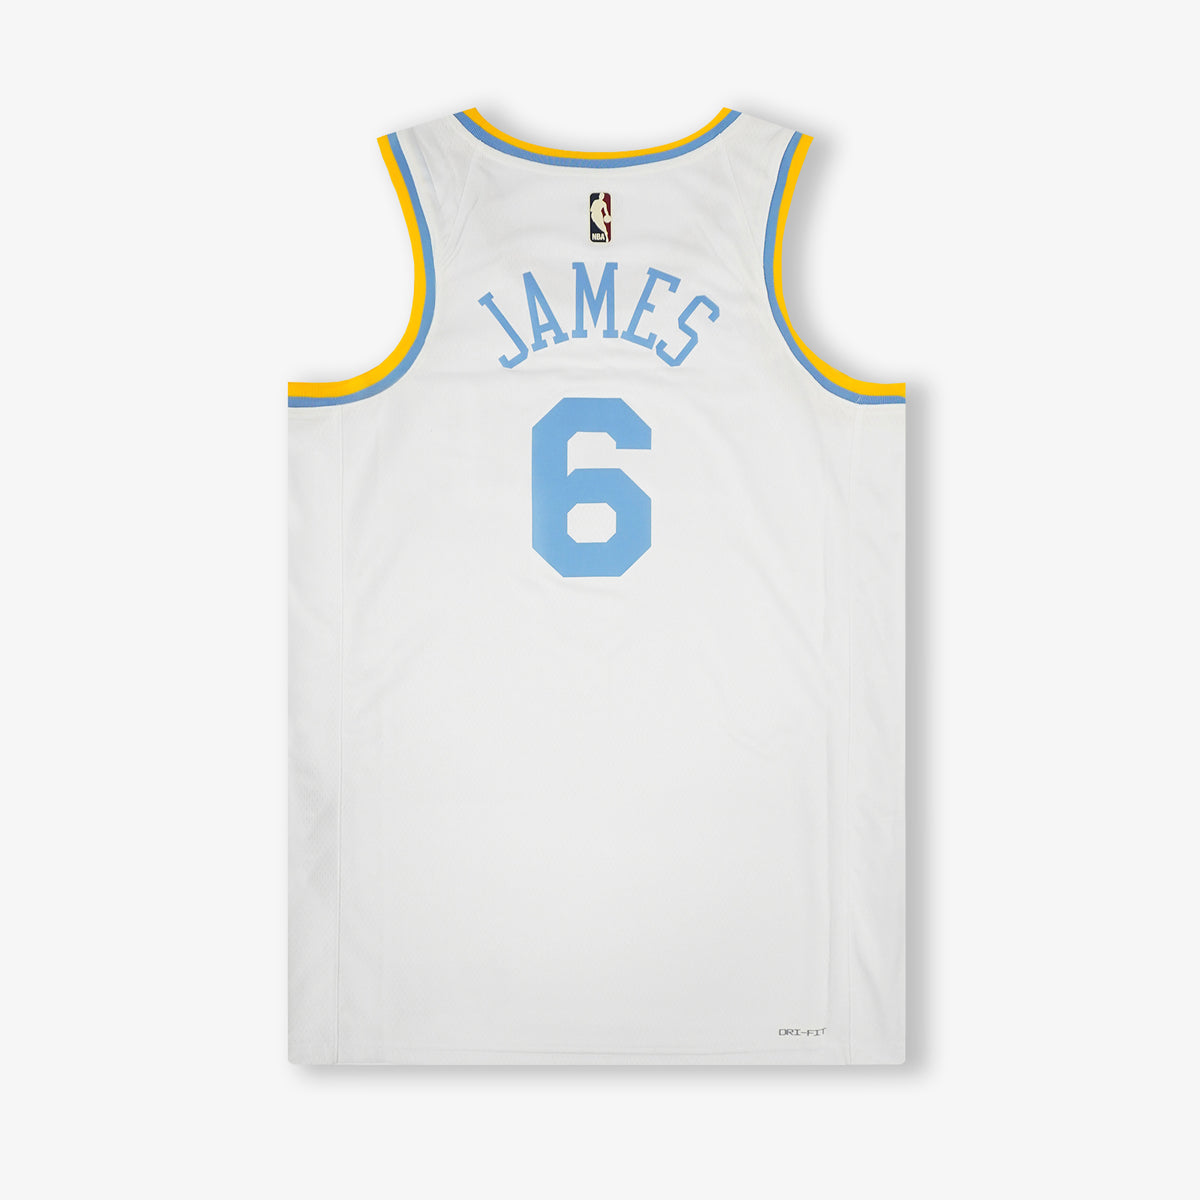 LeBron James Los Angeles Lakers Nike Swingman Jersey - Classic Edition -  White